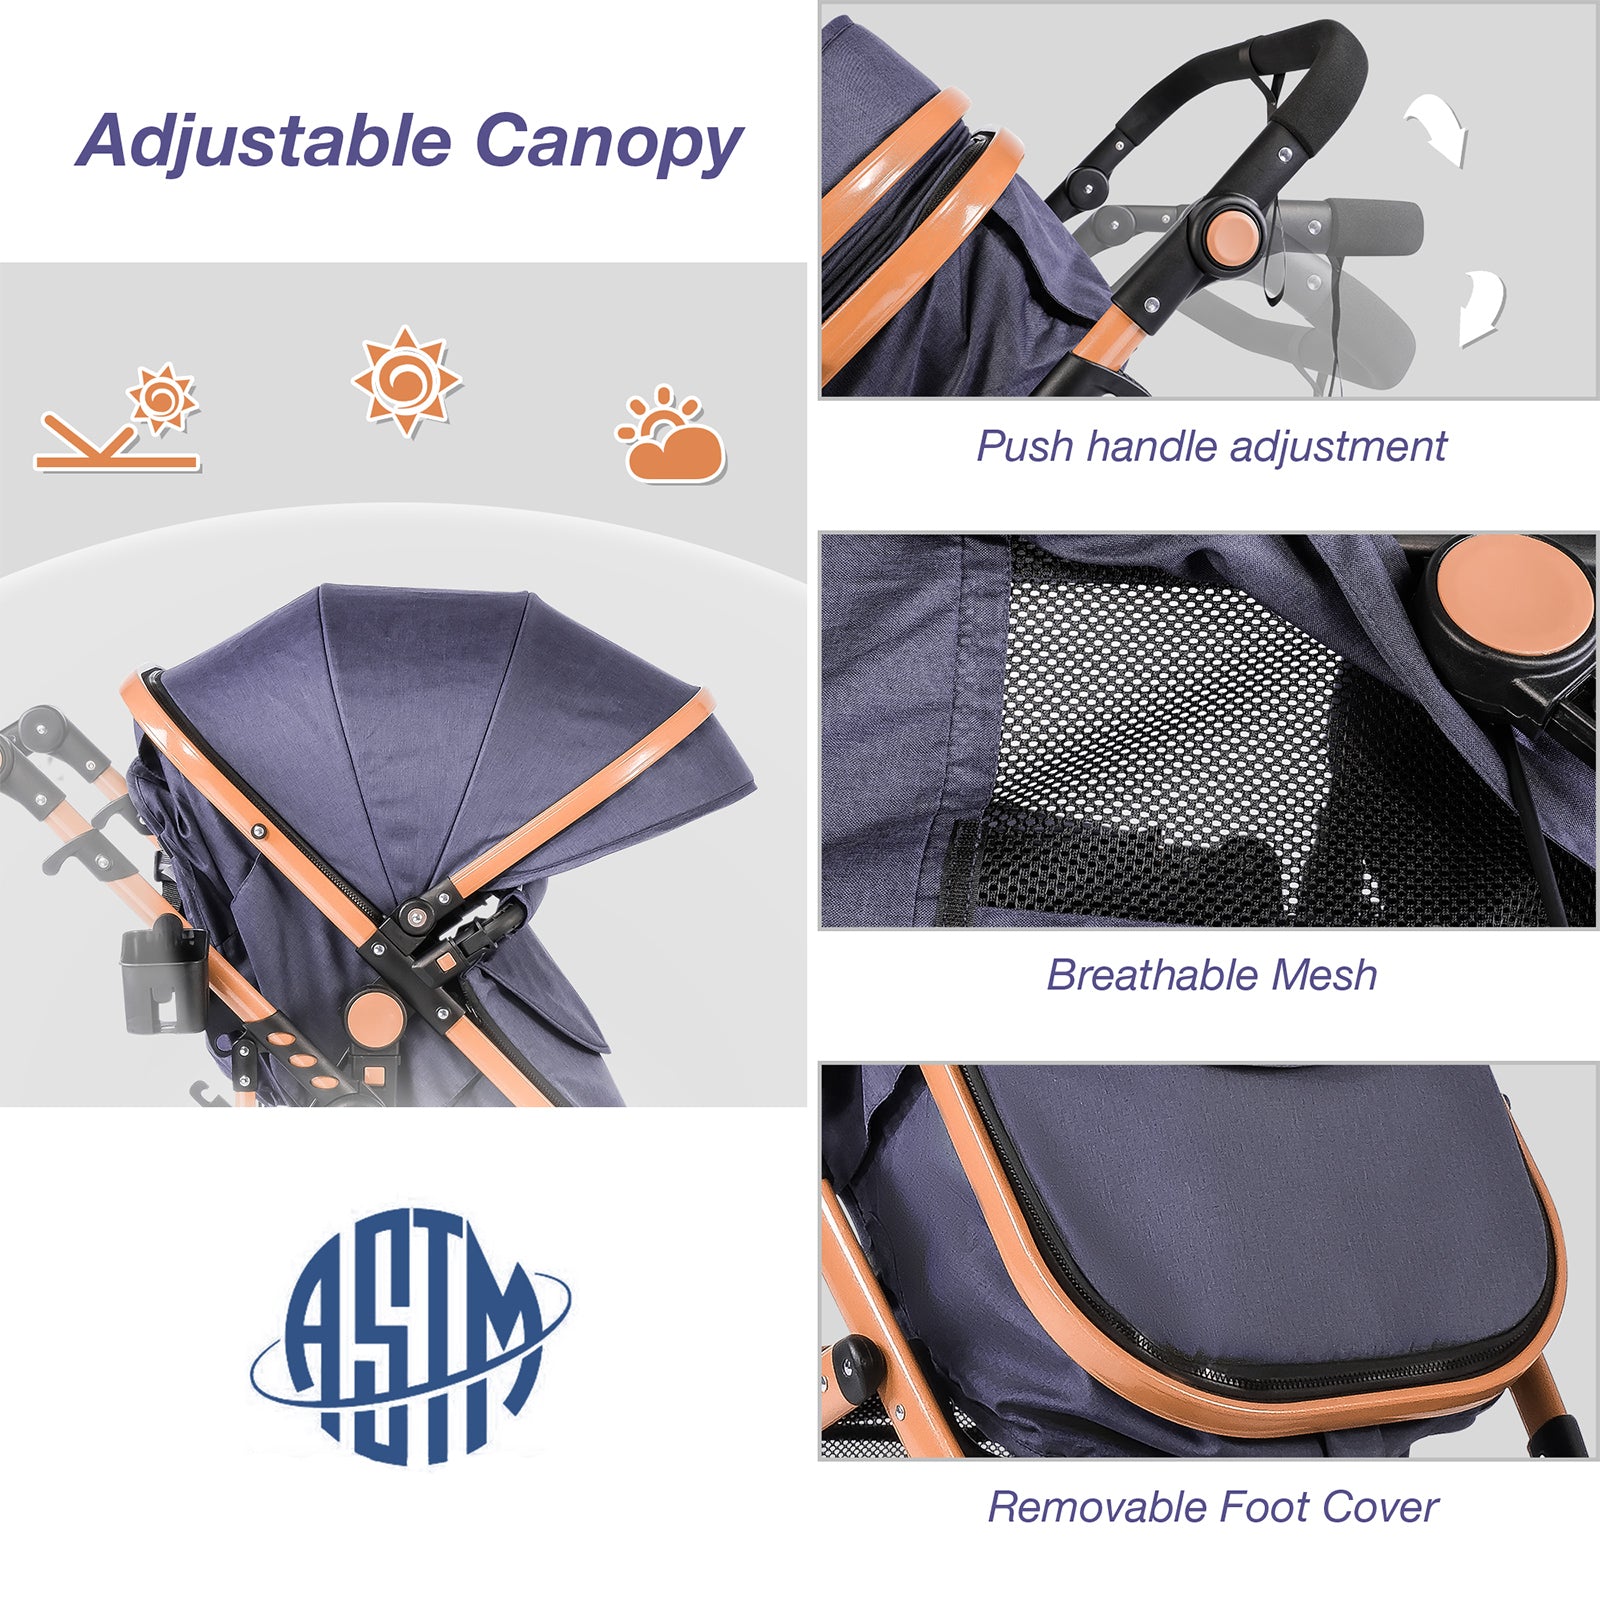 2 in 1 Baby Stroller Newborn Reversible Bassinet Pram Foldable Pushchair with Adjustable Canopy, Navy Blue